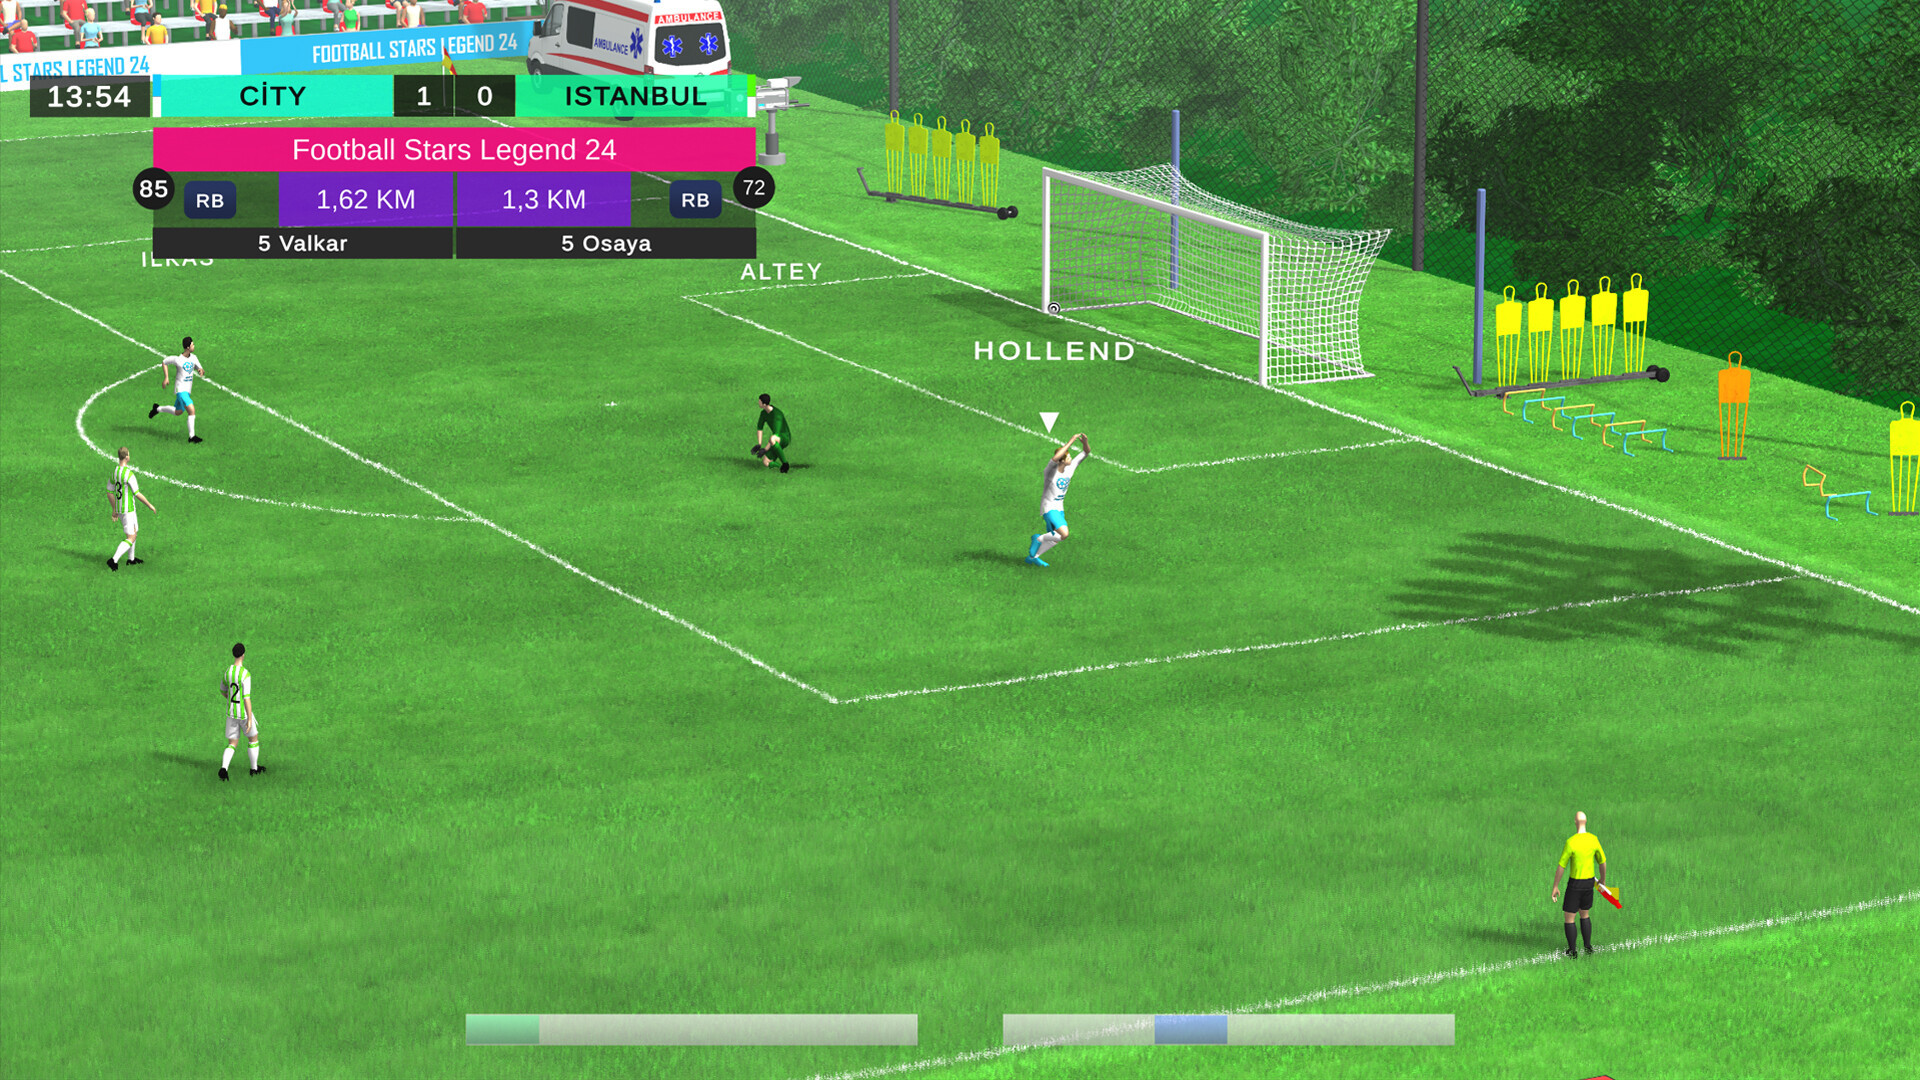 【PC游戏】足球模拟游戏《足球明星传奇24》Steam页面上线 支持简中-第3张